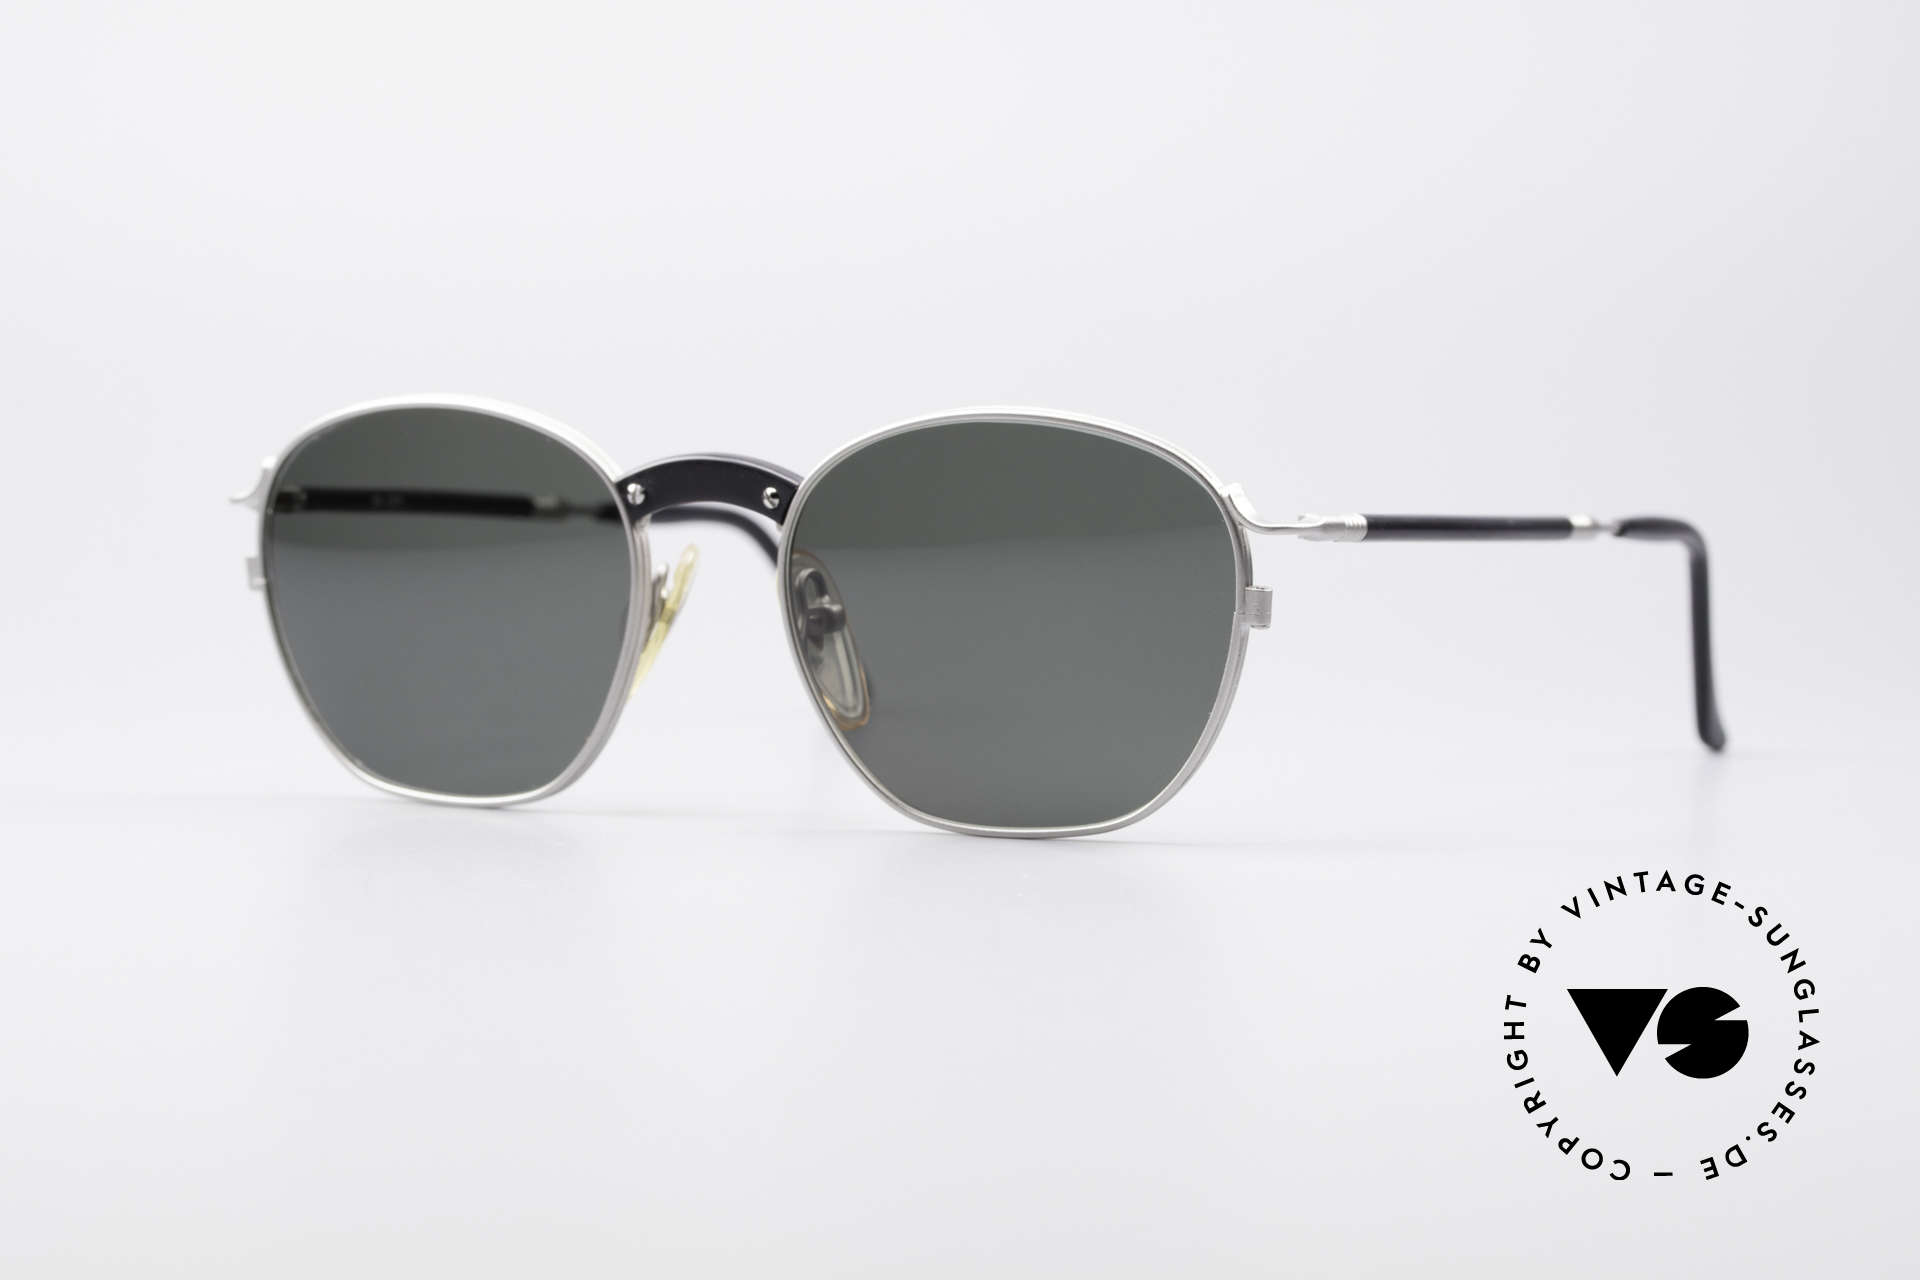 Jean Paul Gaultier 55-1271 Rare Vintage Sunglasses, vintage designer sunglasses by Jean Paul GAULTIER, Made for Men and Women